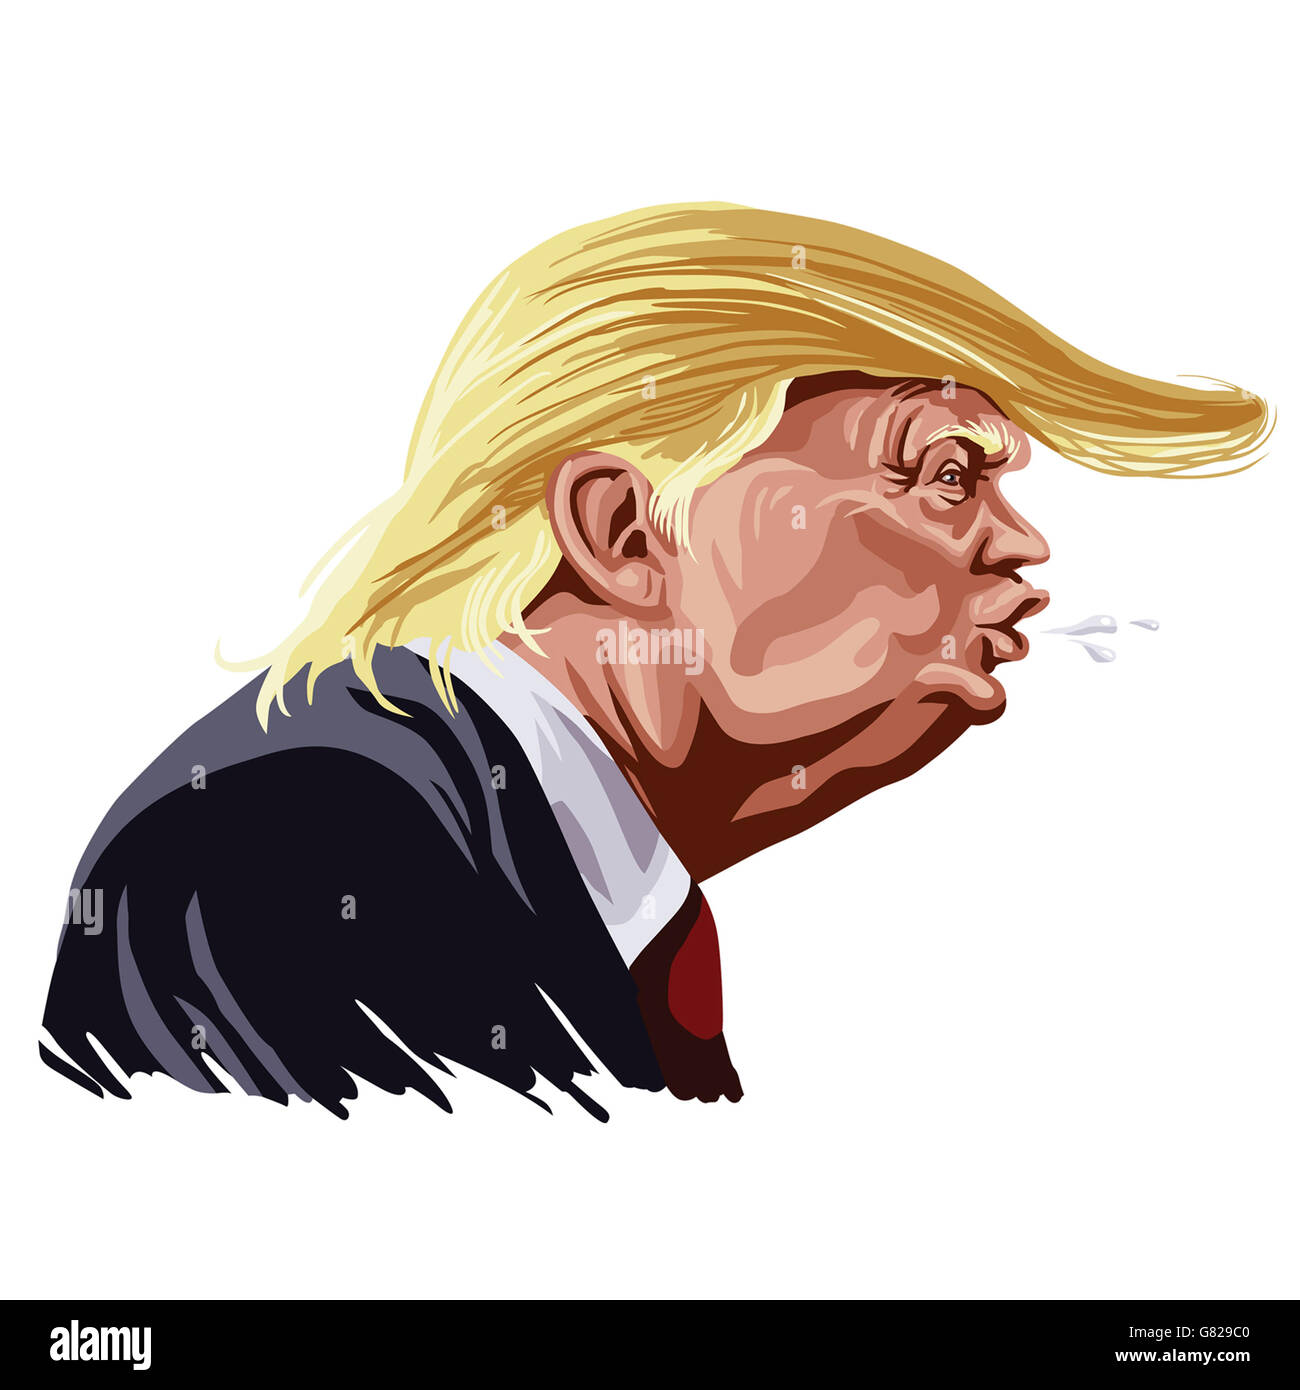 Donald Trump Cartoon Karikatur-Vektor-Illustration Stockfoto